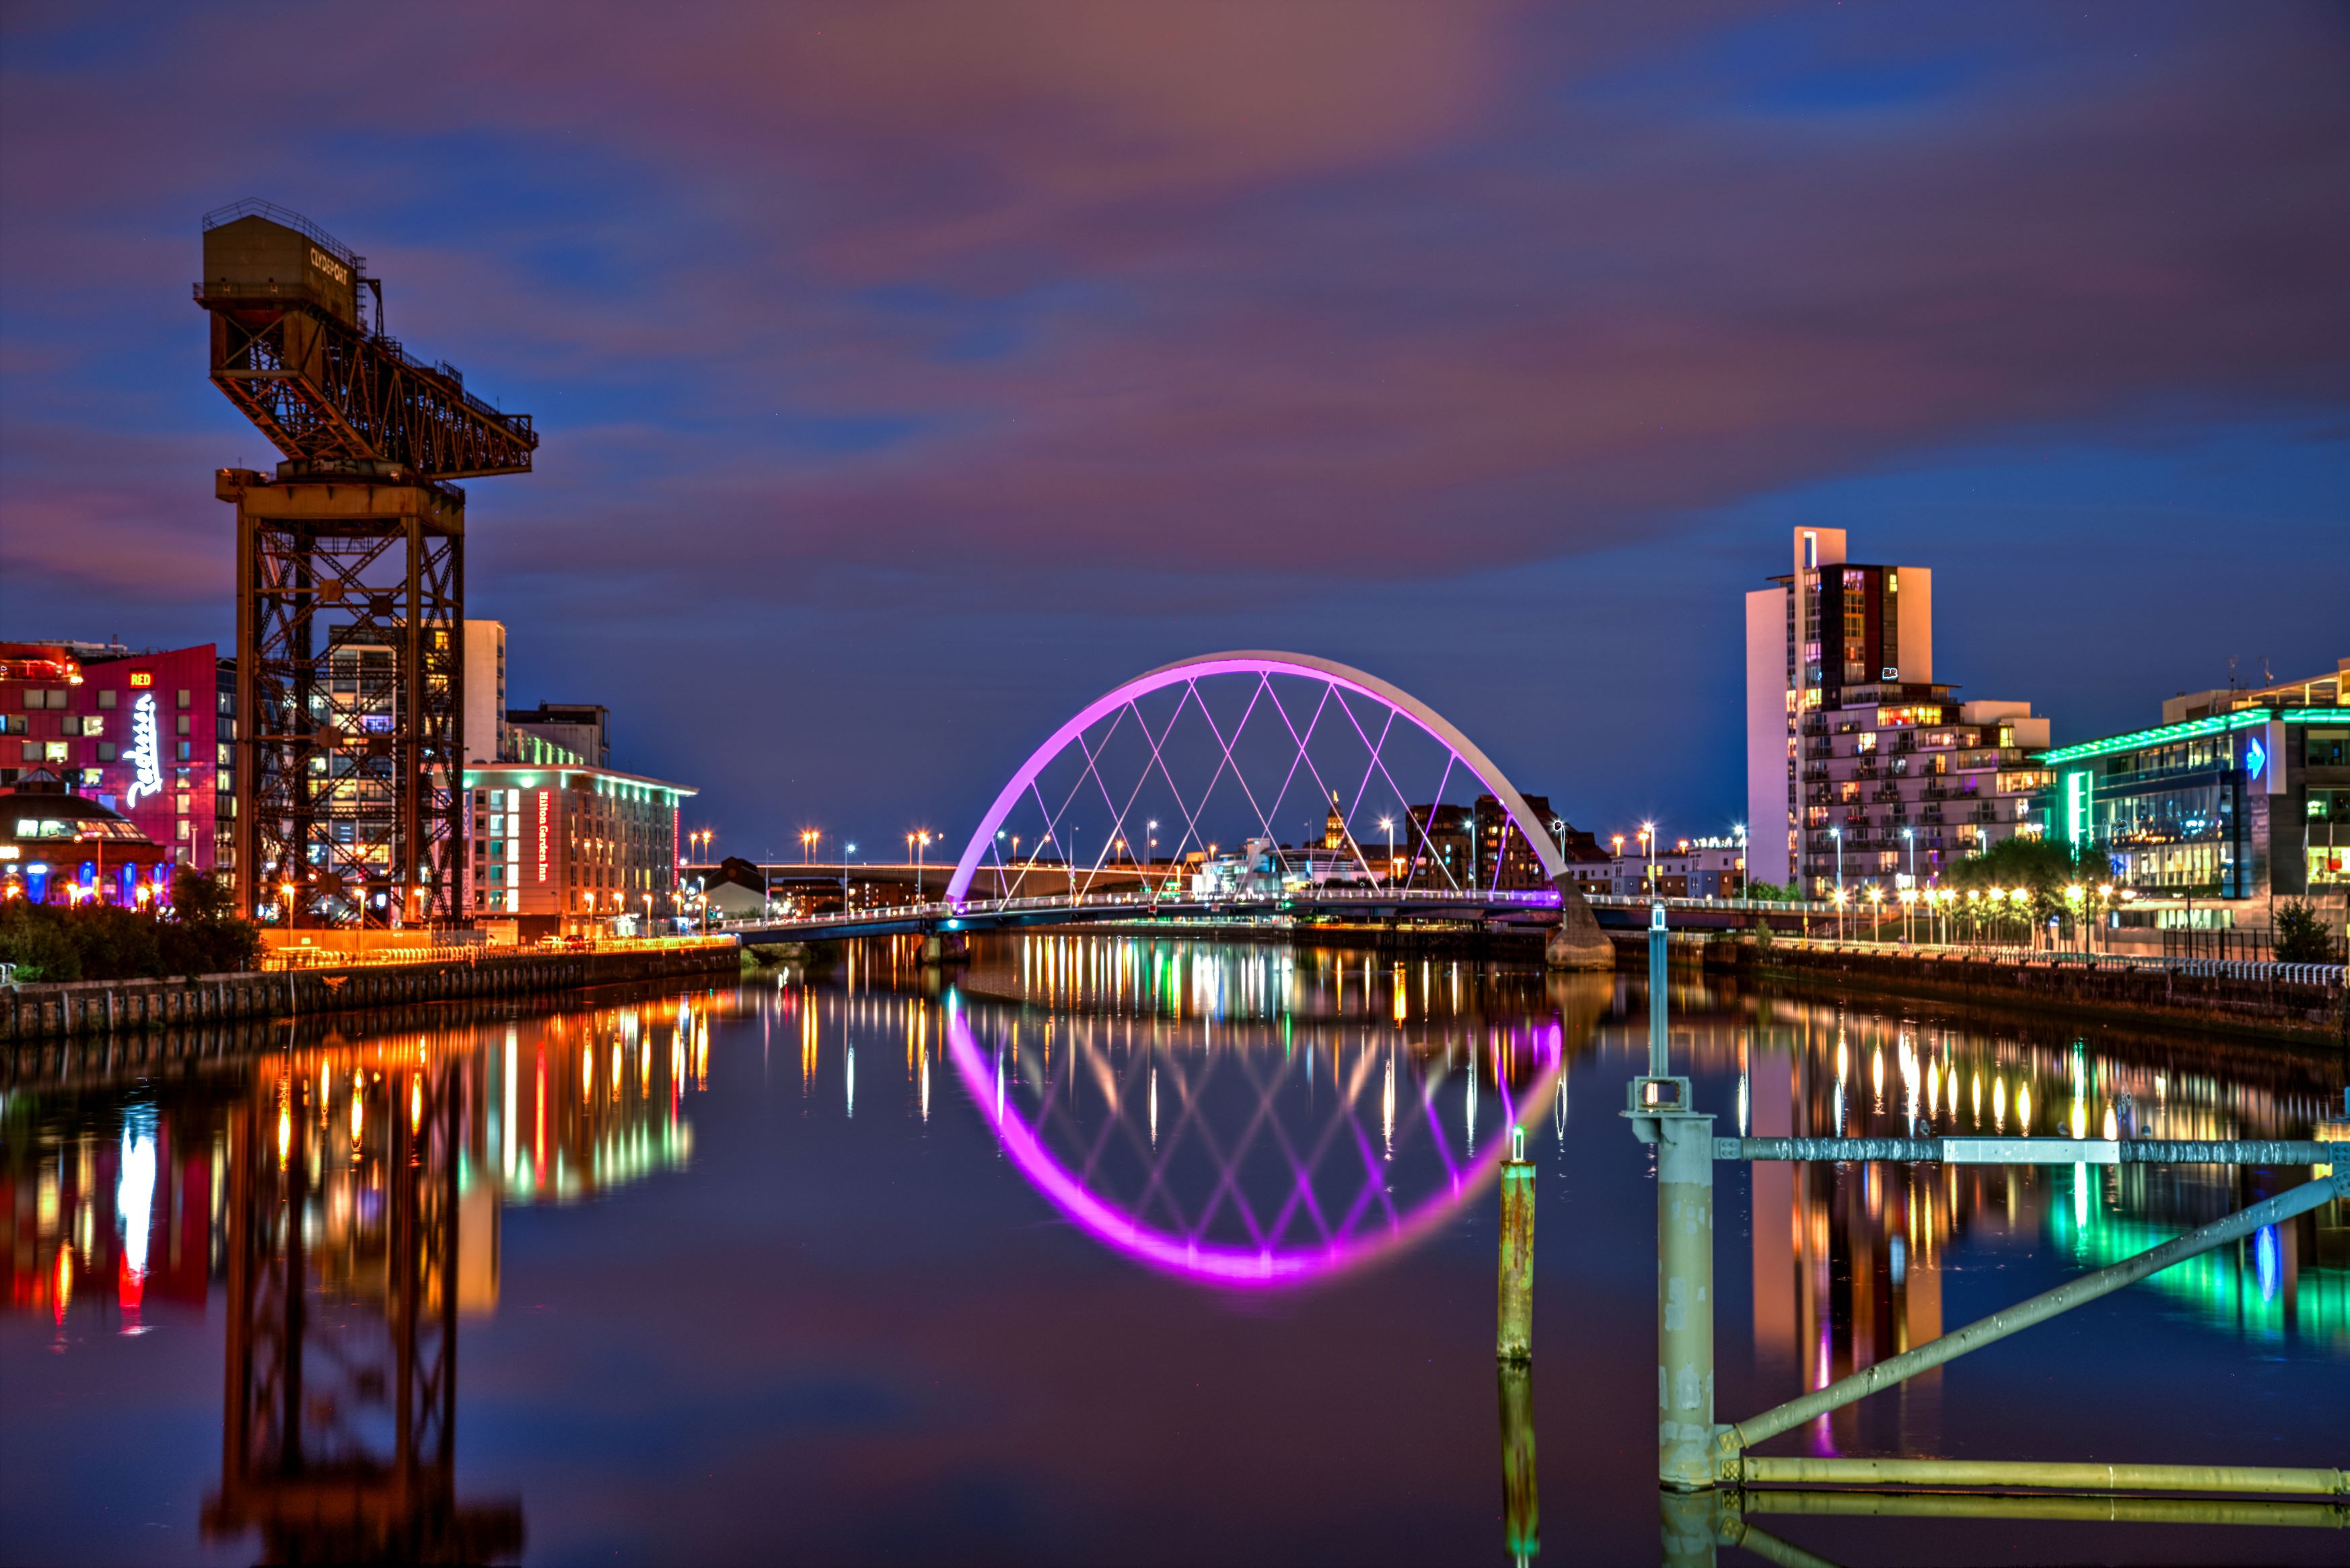 Glasgow city center at night